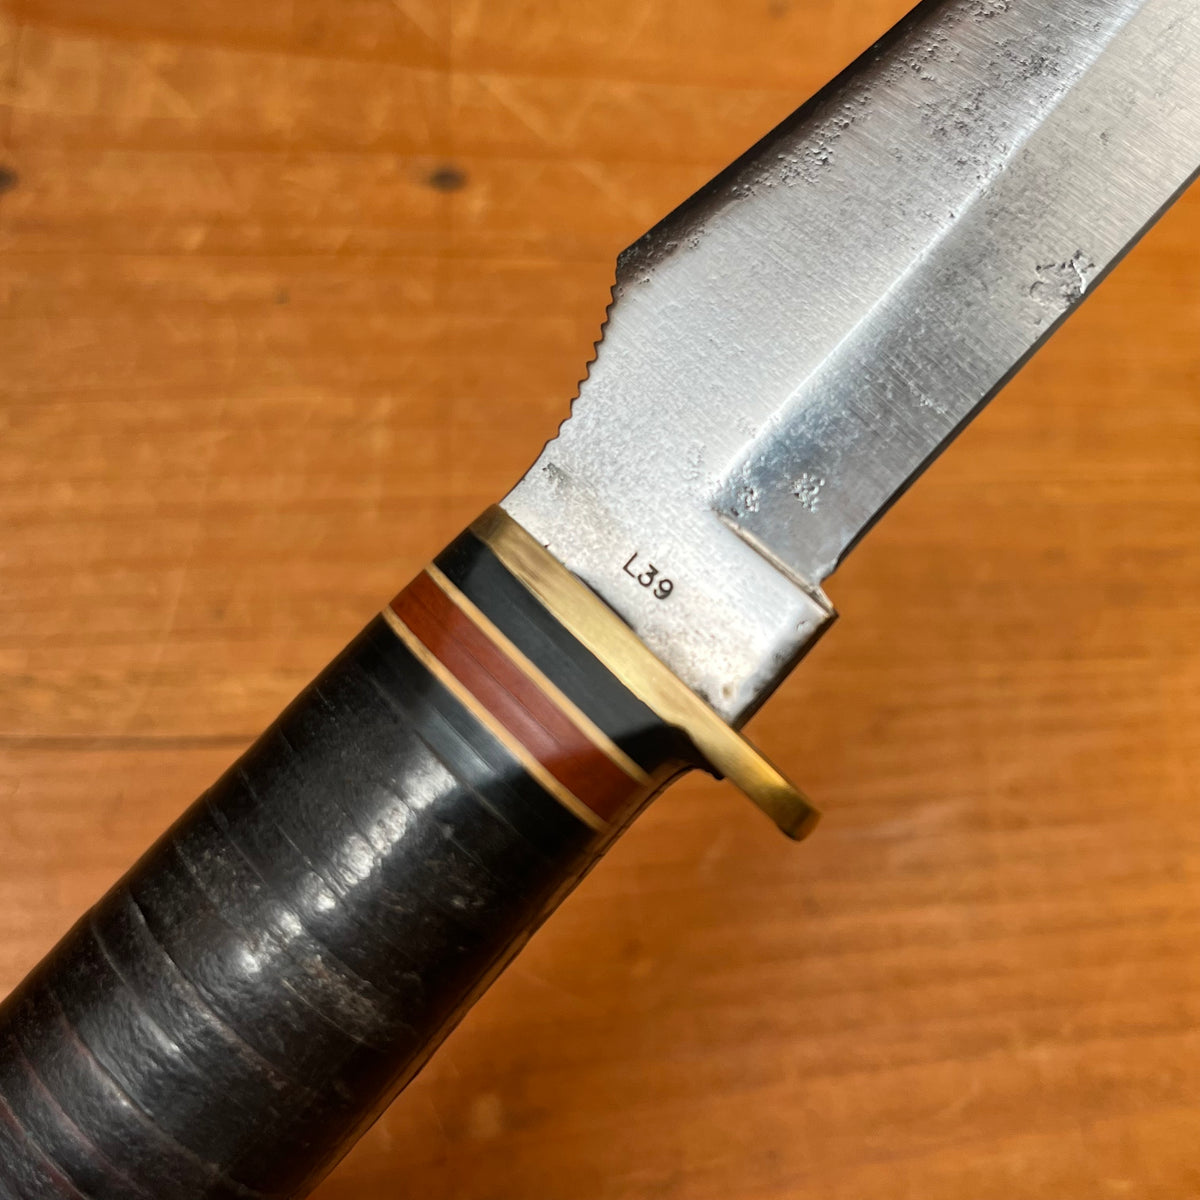 Western Boulder Colo L-39 5” Fixed Blade Knife Boulder Colo. 1956-78